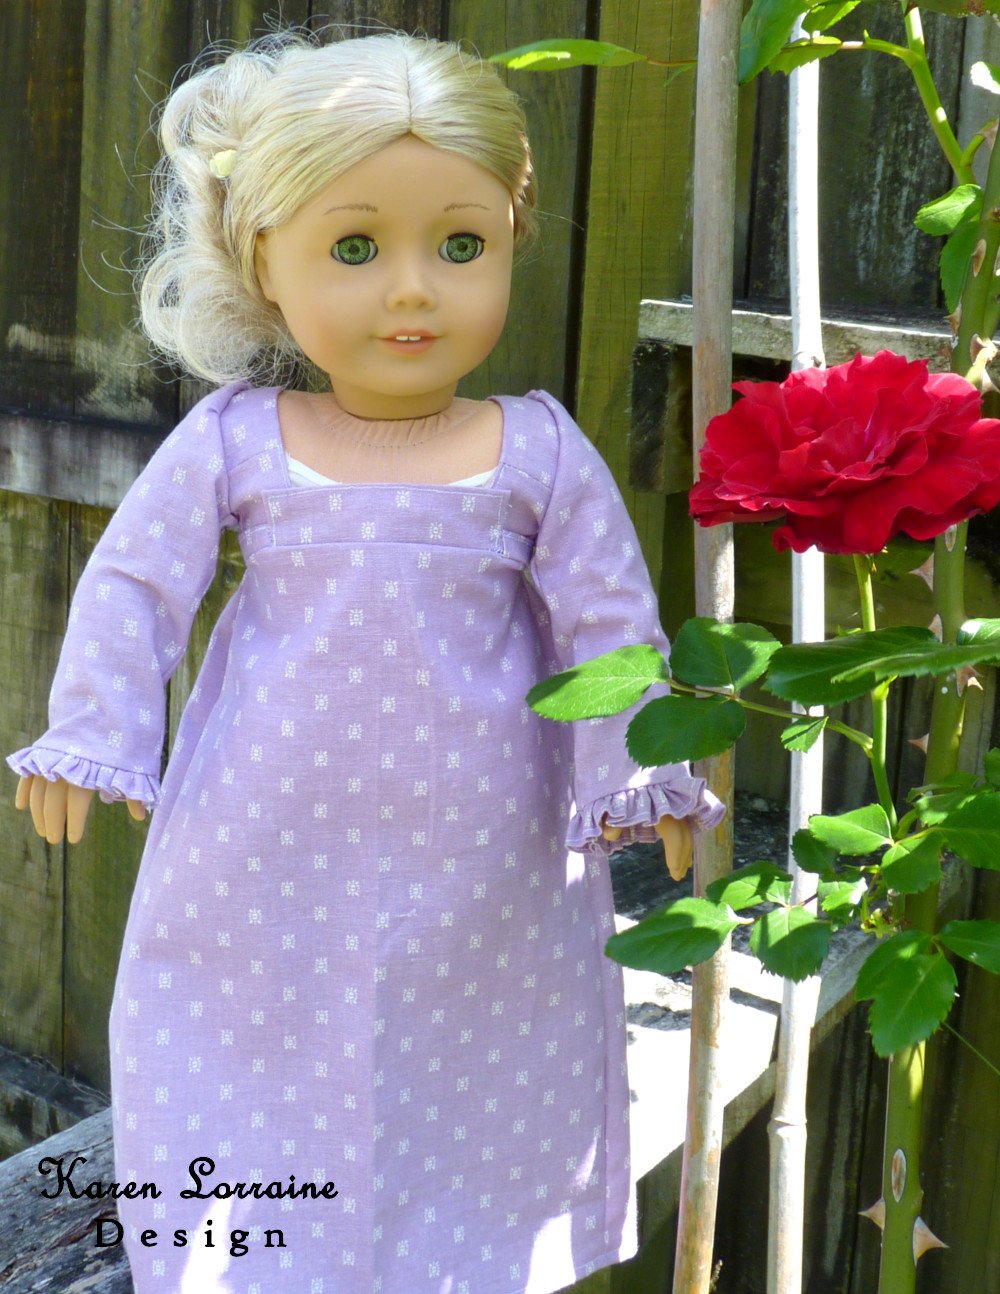 Karen Lorraine Design Regency Style Doll Clothes Pattern For 18 Dolls